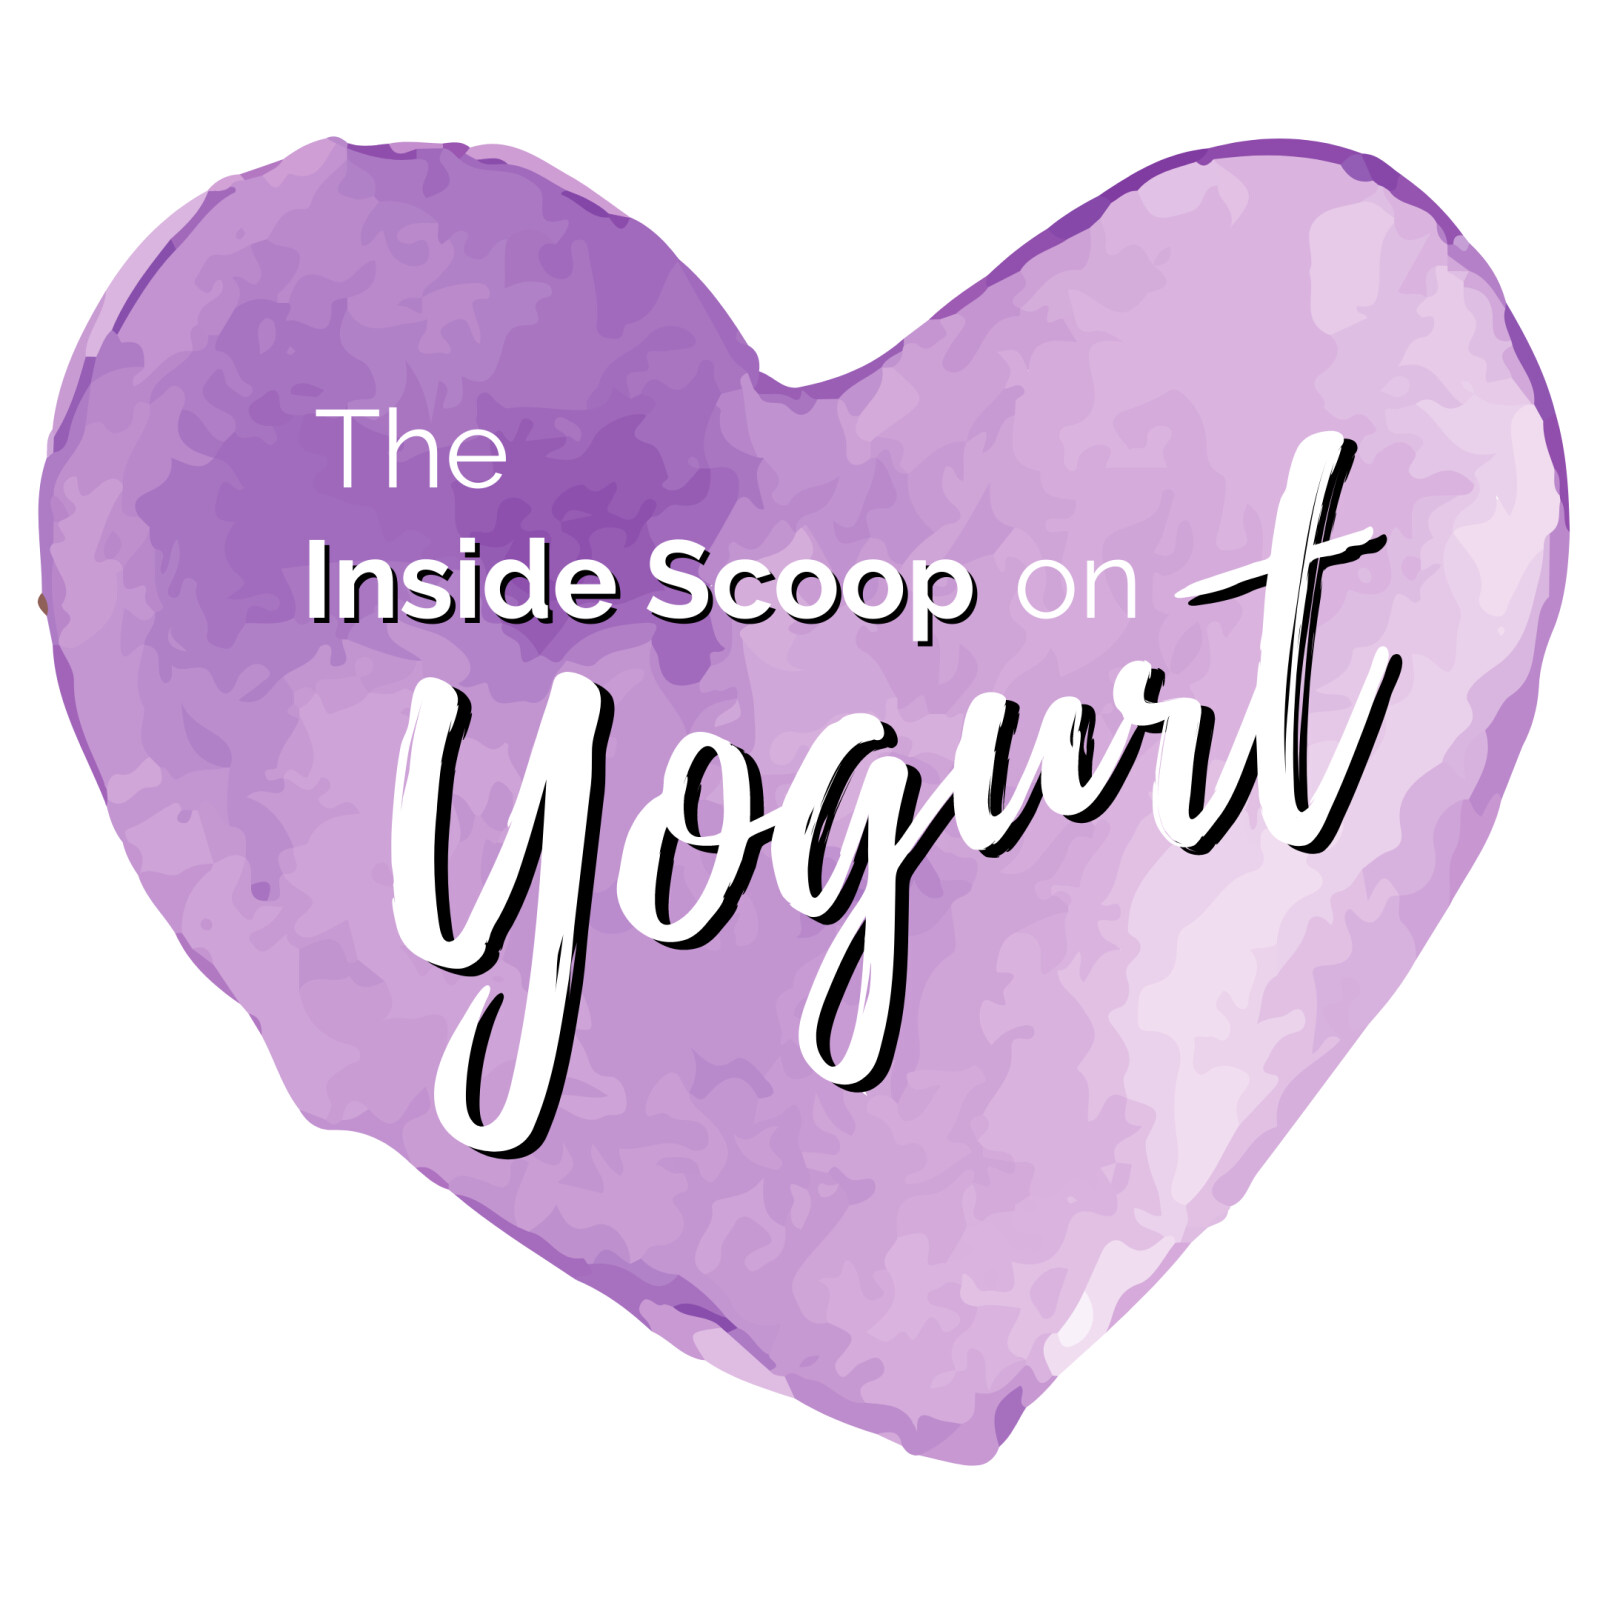 The Inside Scoop on Yogurt 